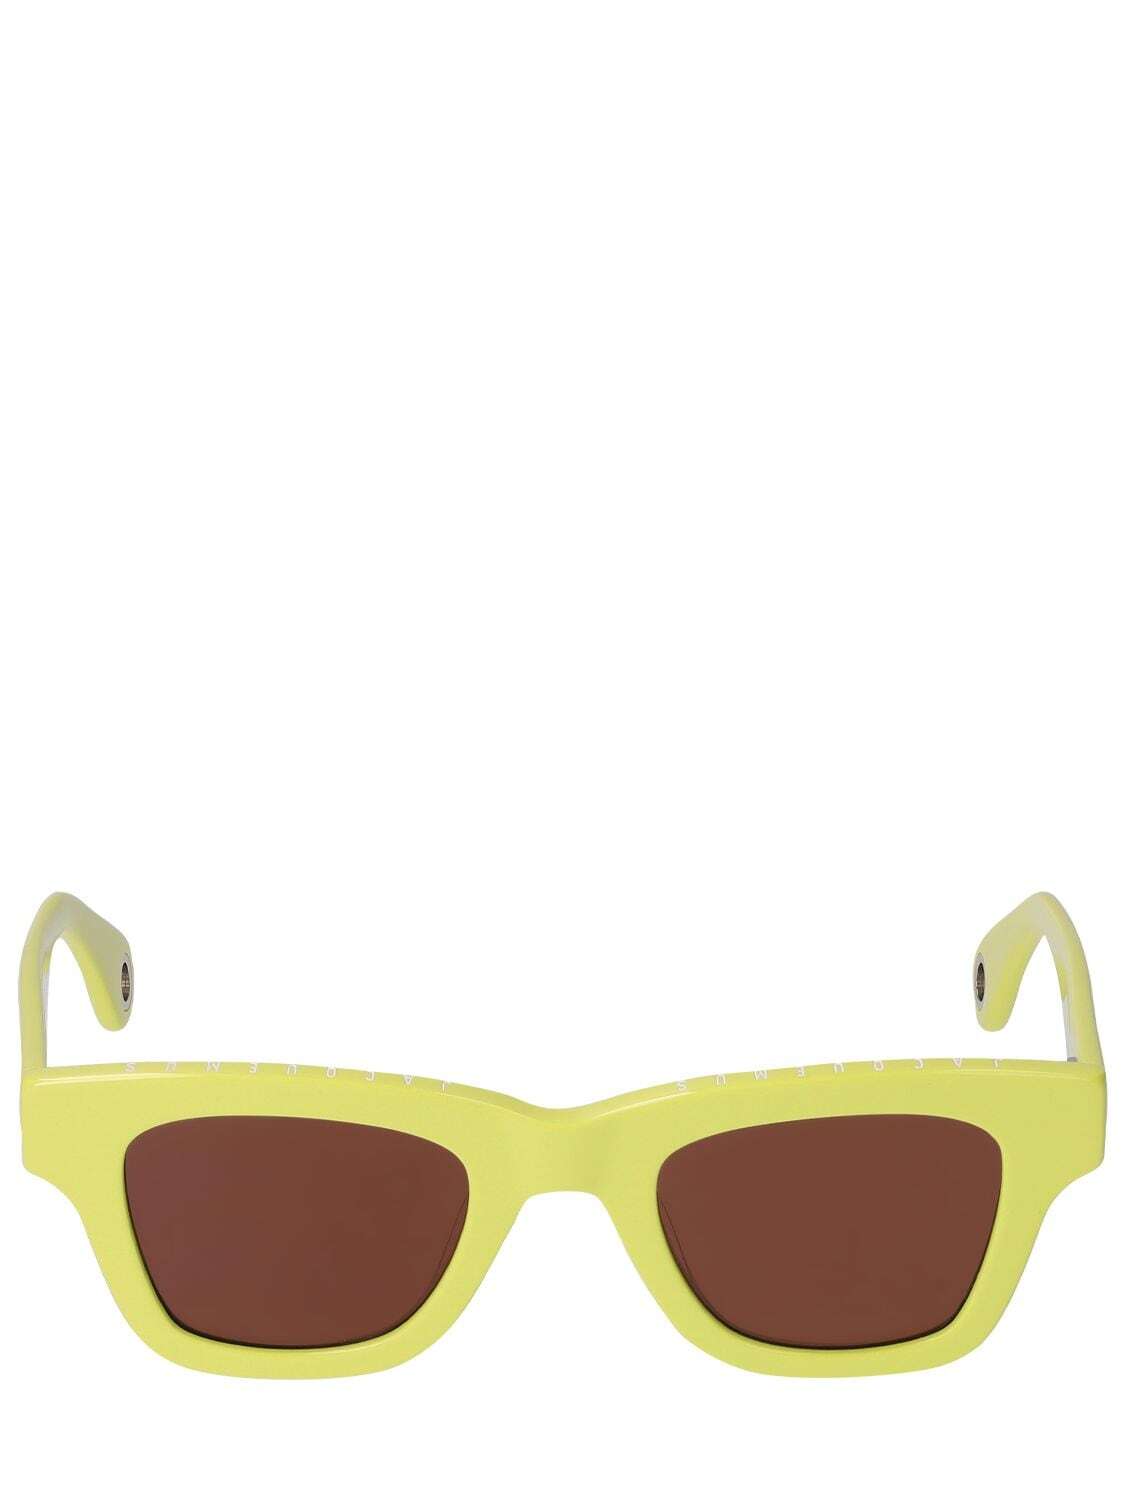 JACQUEMUS Les Lunettes Nocio Sunglasses in brown / yellow